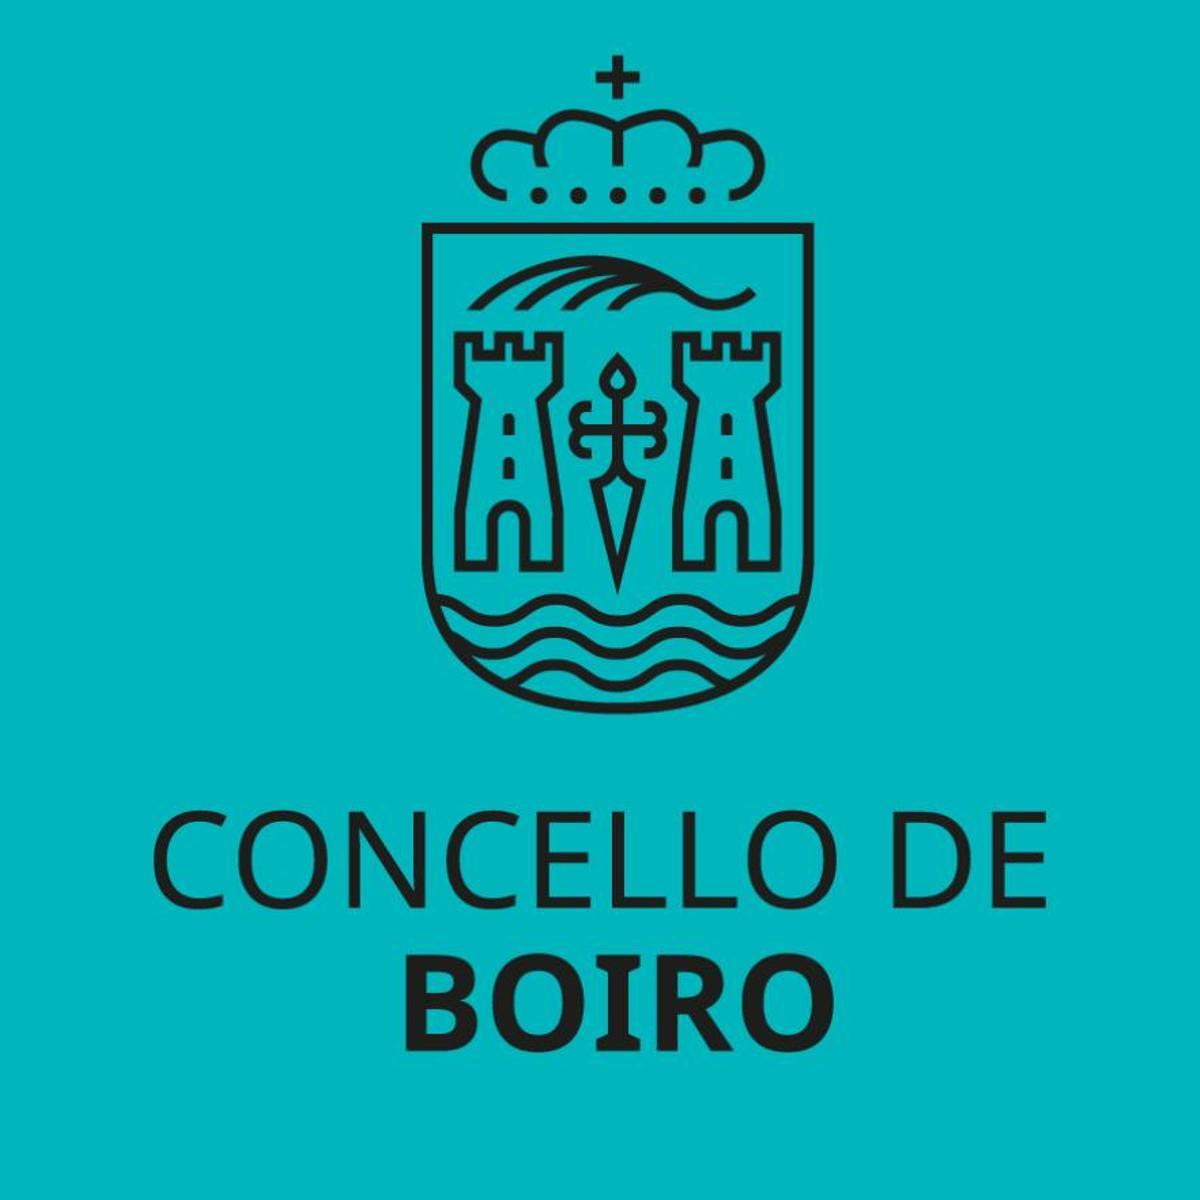 Imagen institucional del Concello de Boiro